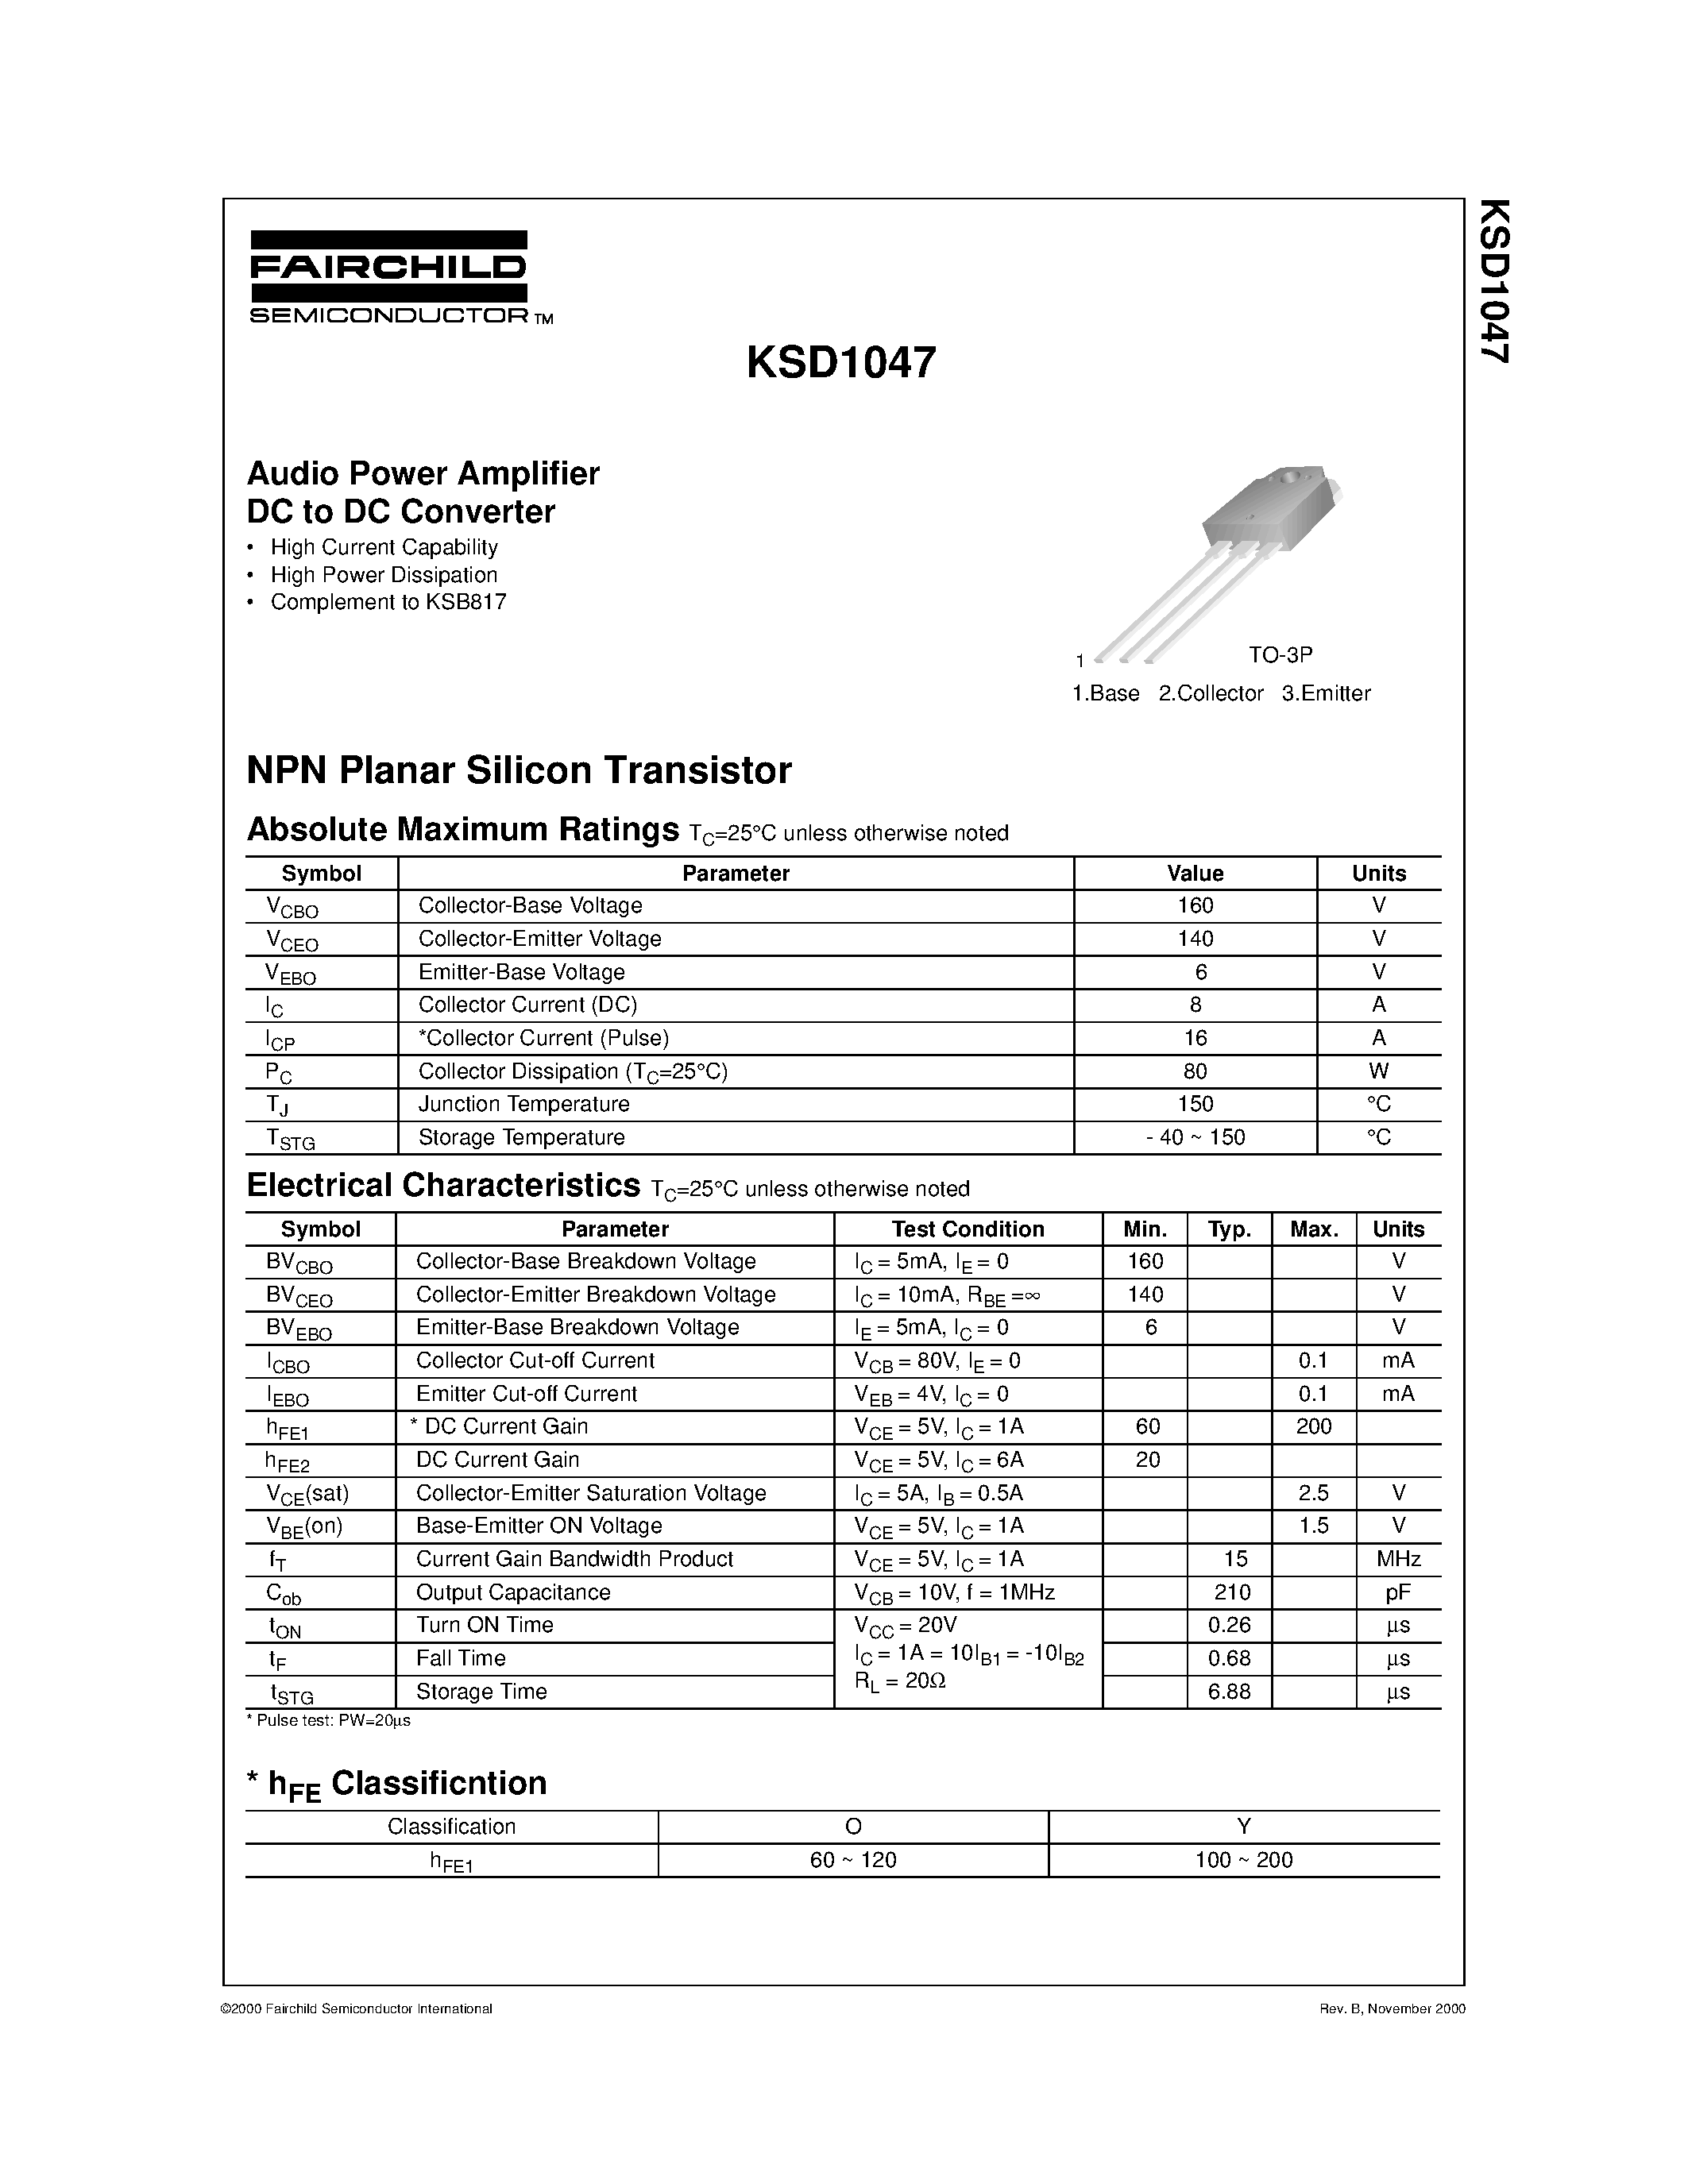 Datasheet KSD1047 - Audio Power Amplifier DC to DC Converter page 1